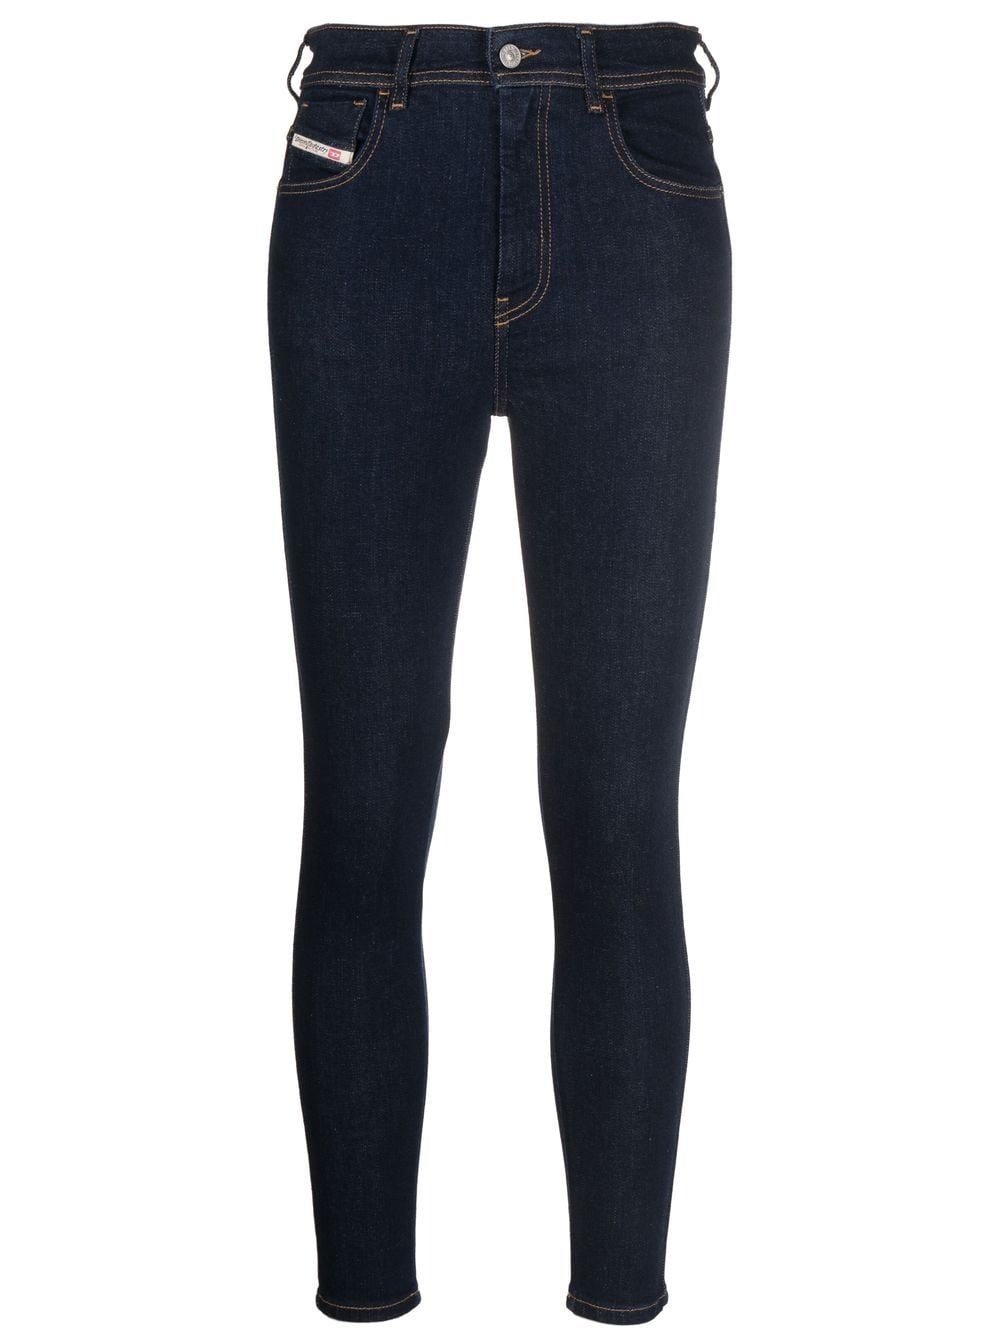 Slandy skinny jeans - 1